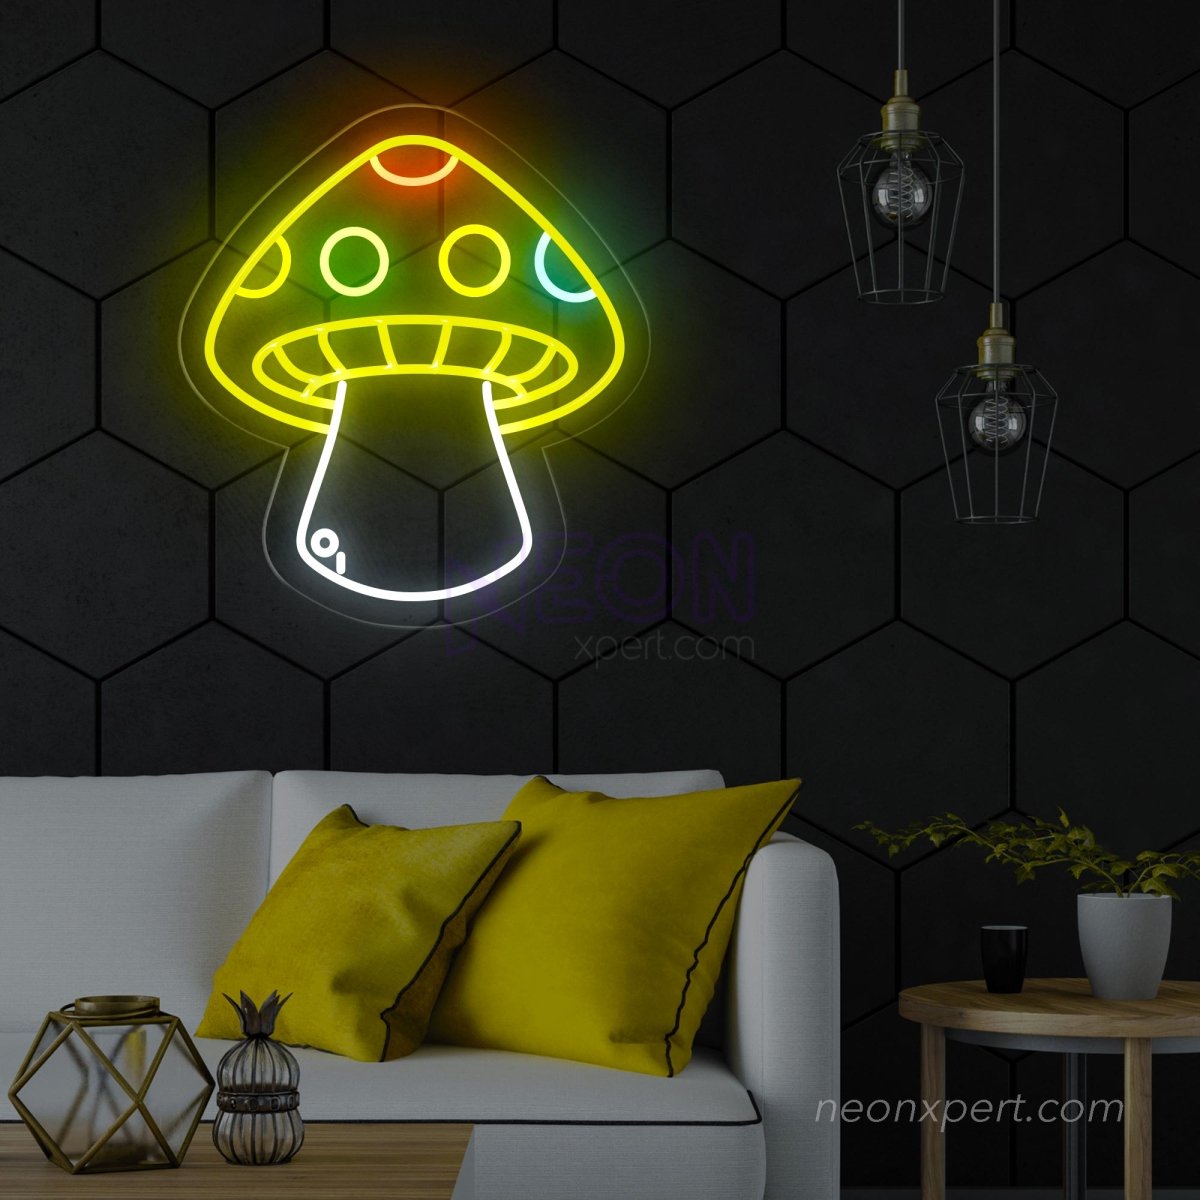 Mushroom Neon Signs for Wall Decor - NeonXpert